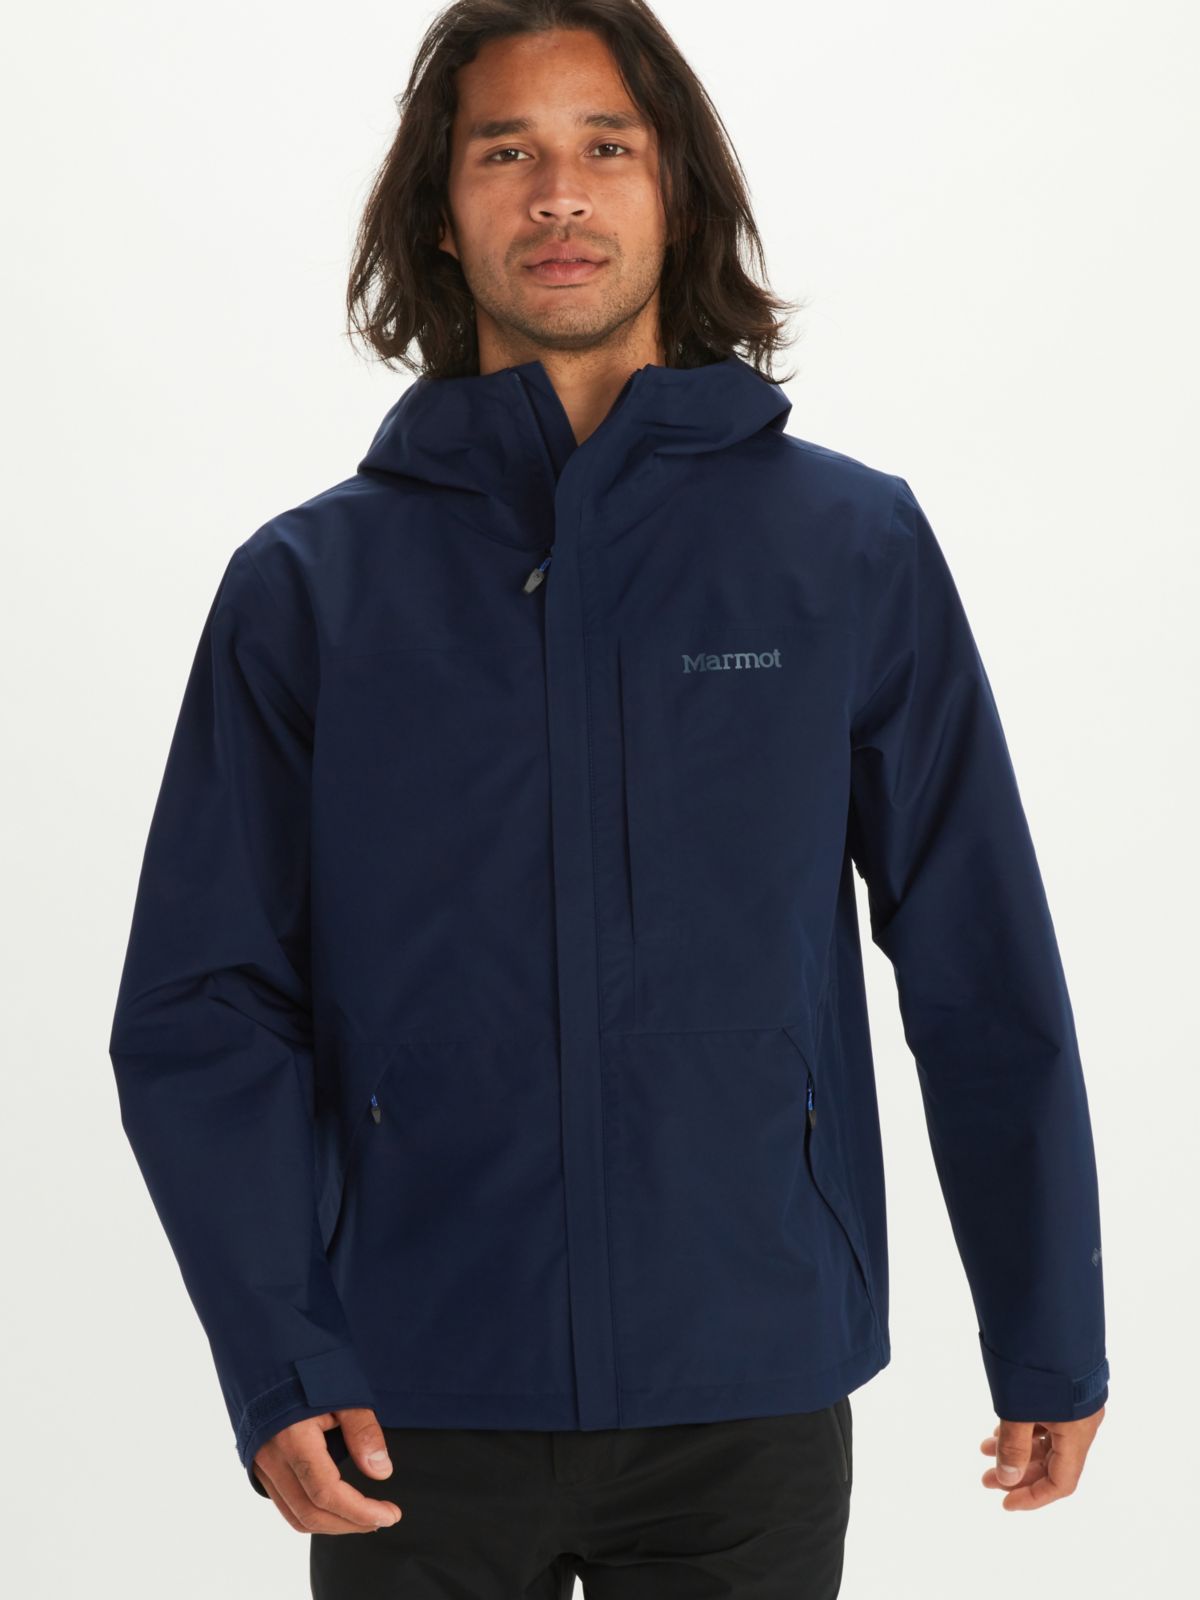 man modeling ski and snowboard jacket